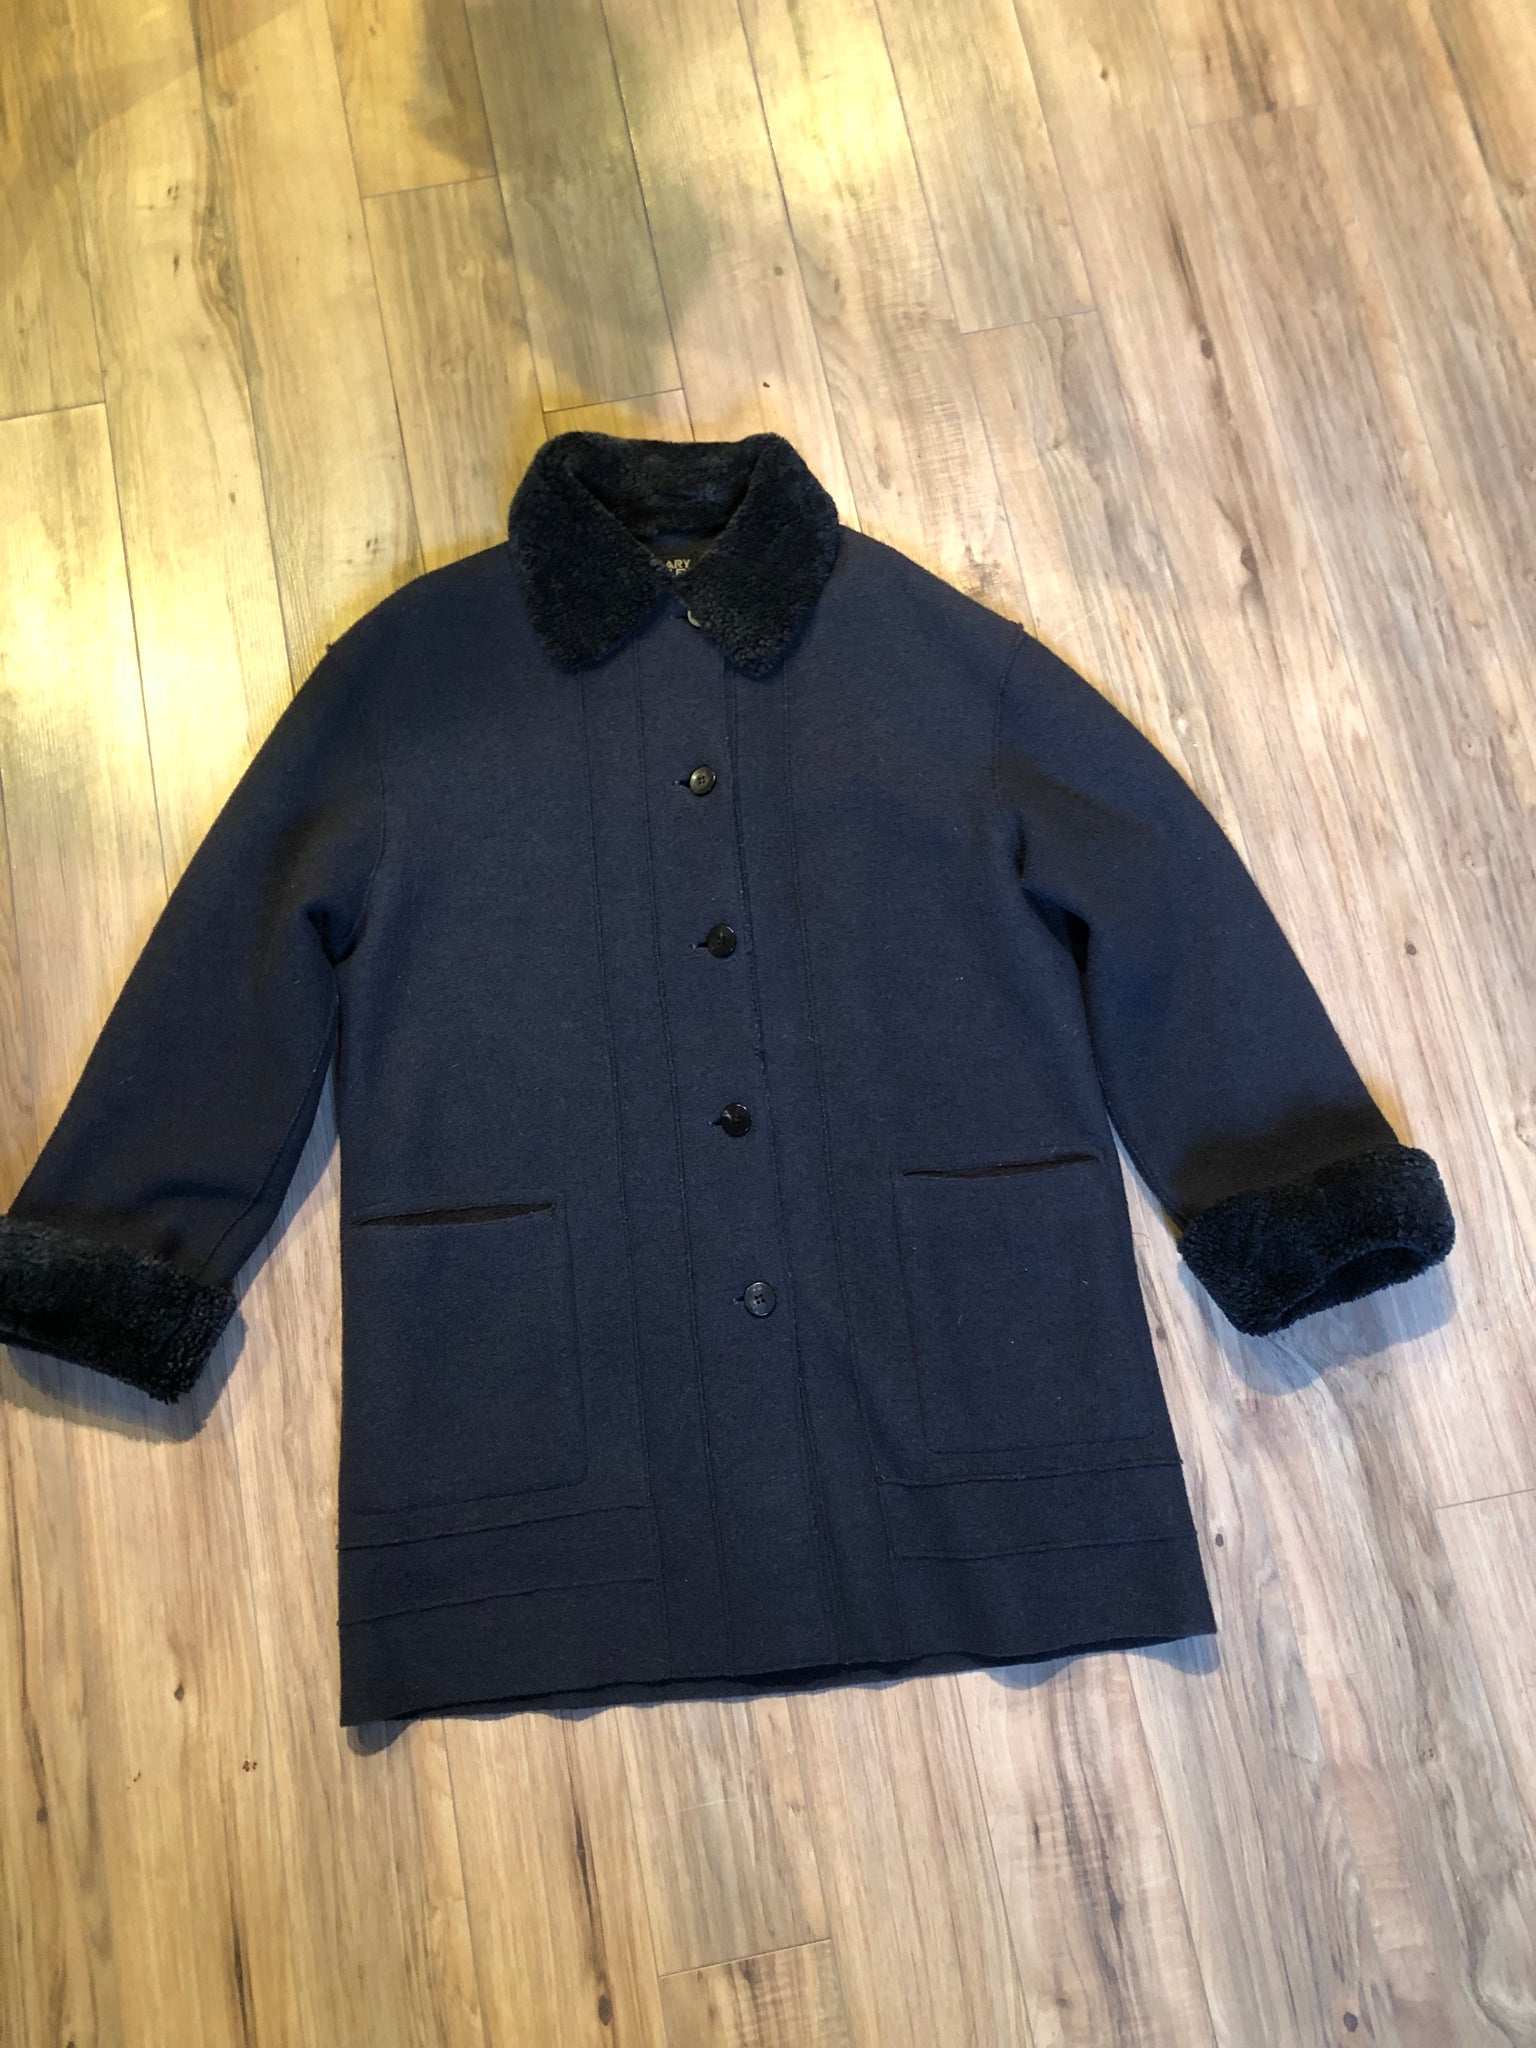 Vintage Hilary Radley Wool Coat, Made in Canada – KingsPIER vintage